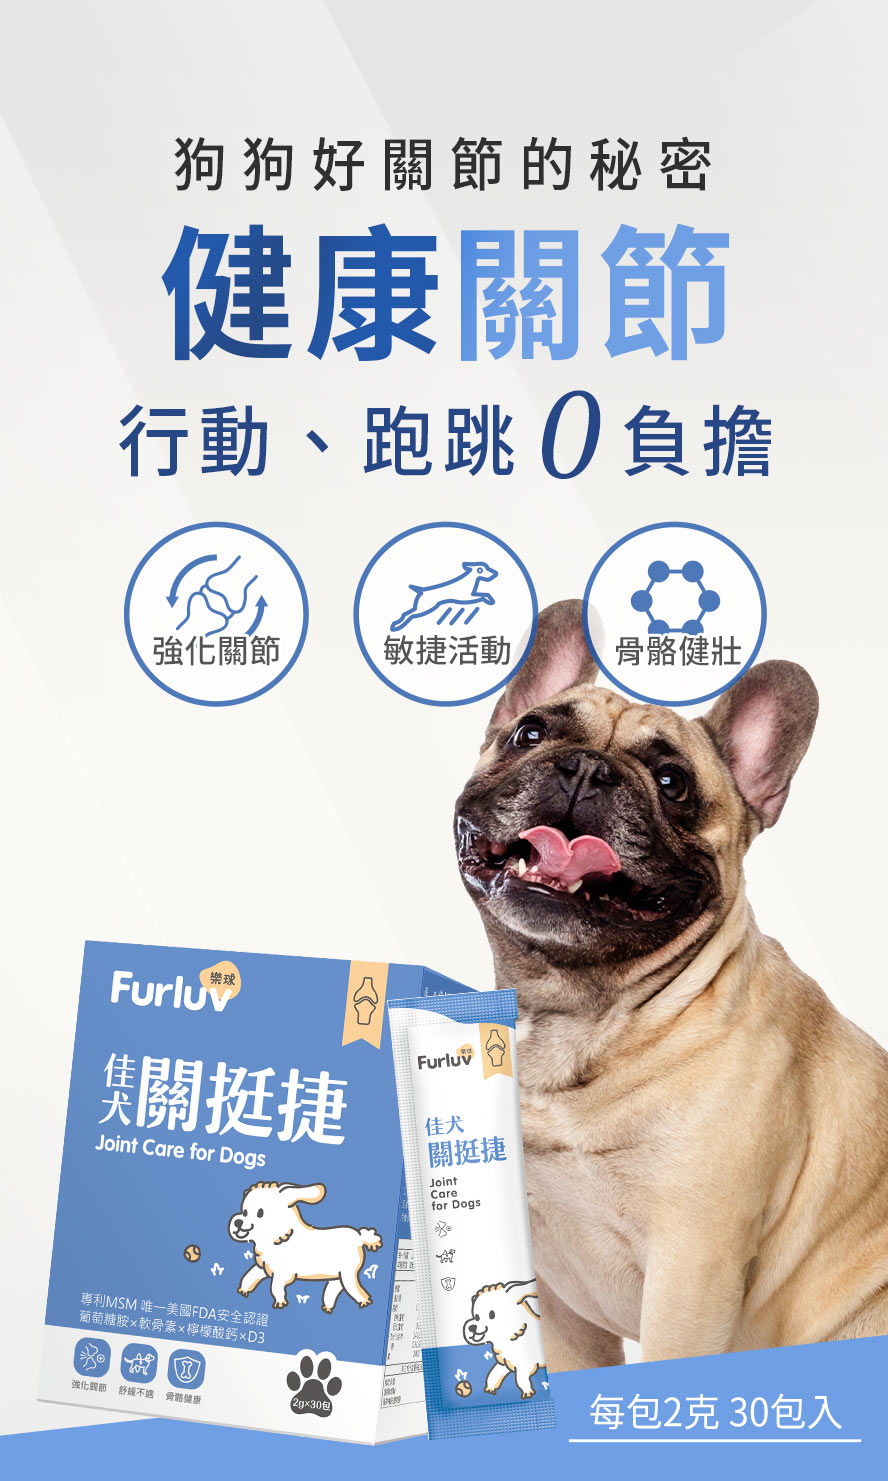 Furluv樂球佳犬關挺捷，維持狗狗健康、靈活的關節，有助狗狗跑跳更順利、0負擔